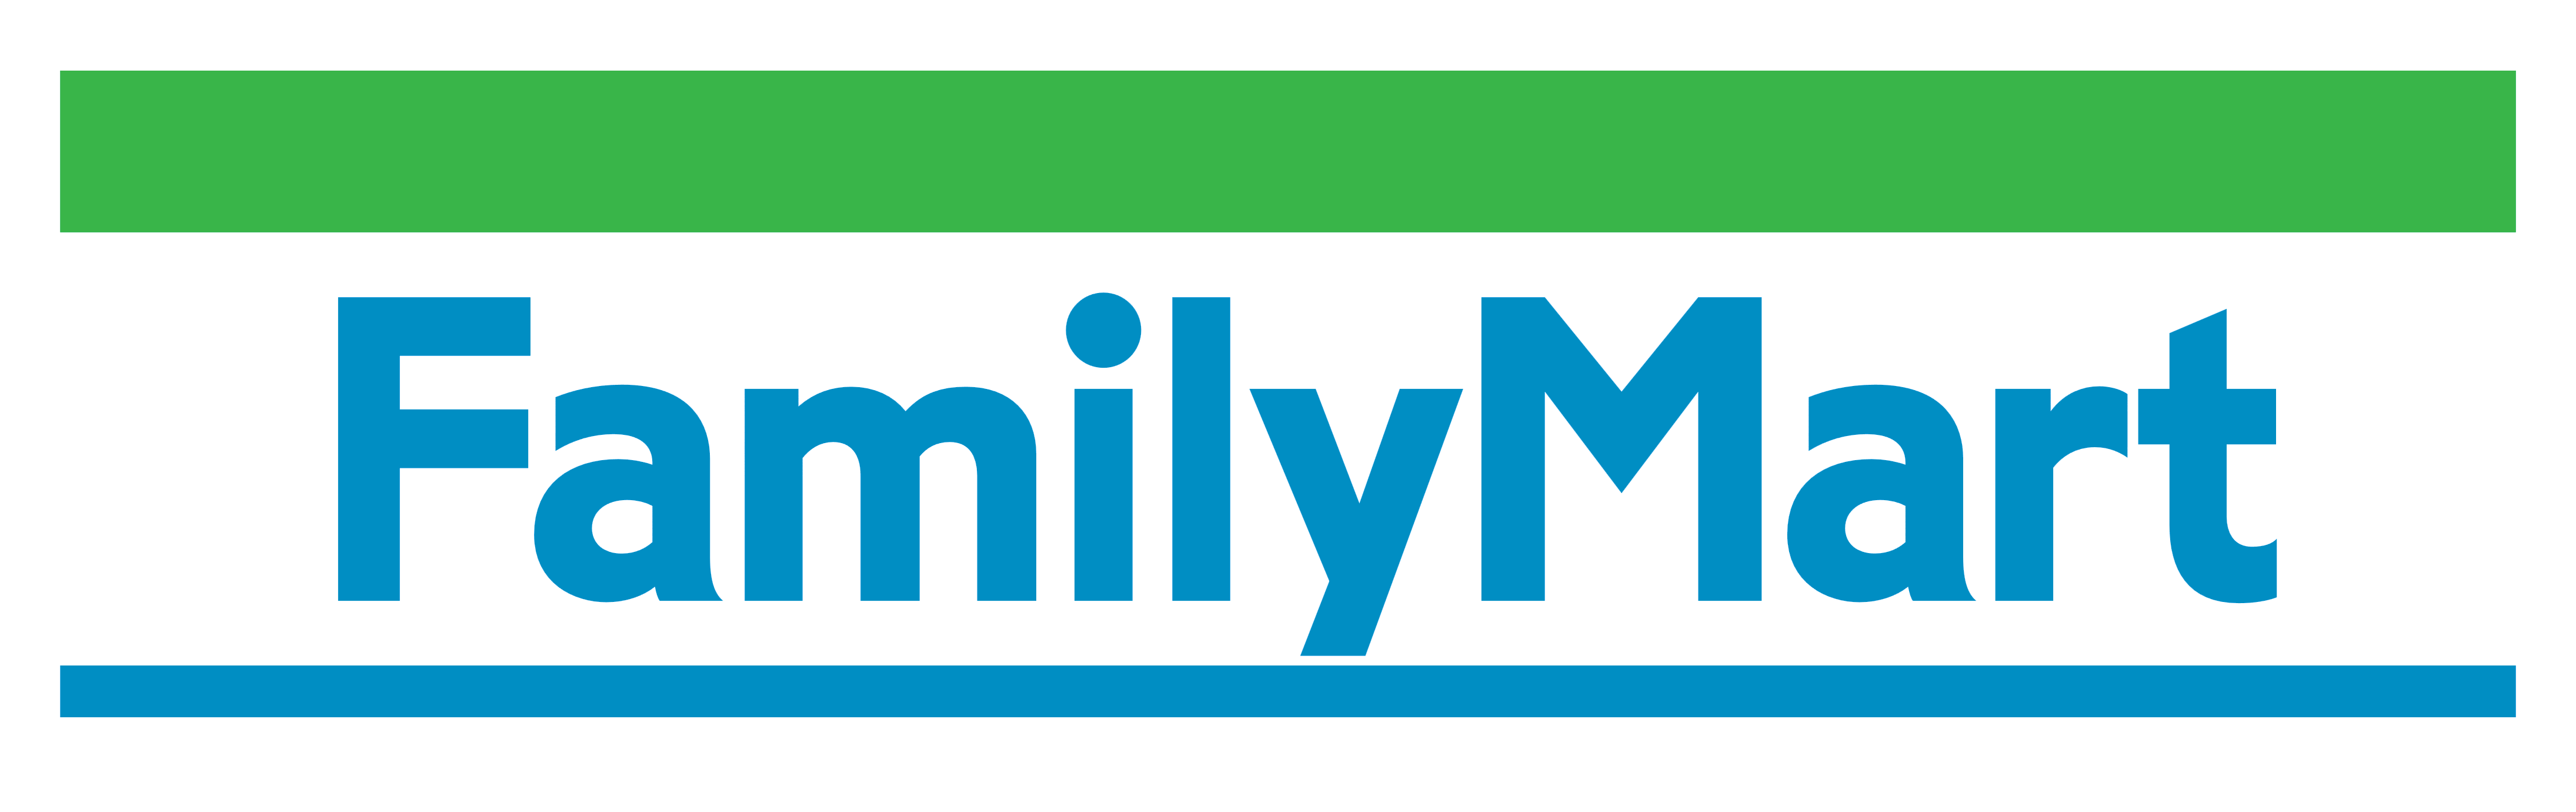 FamilyMart logo, logotype